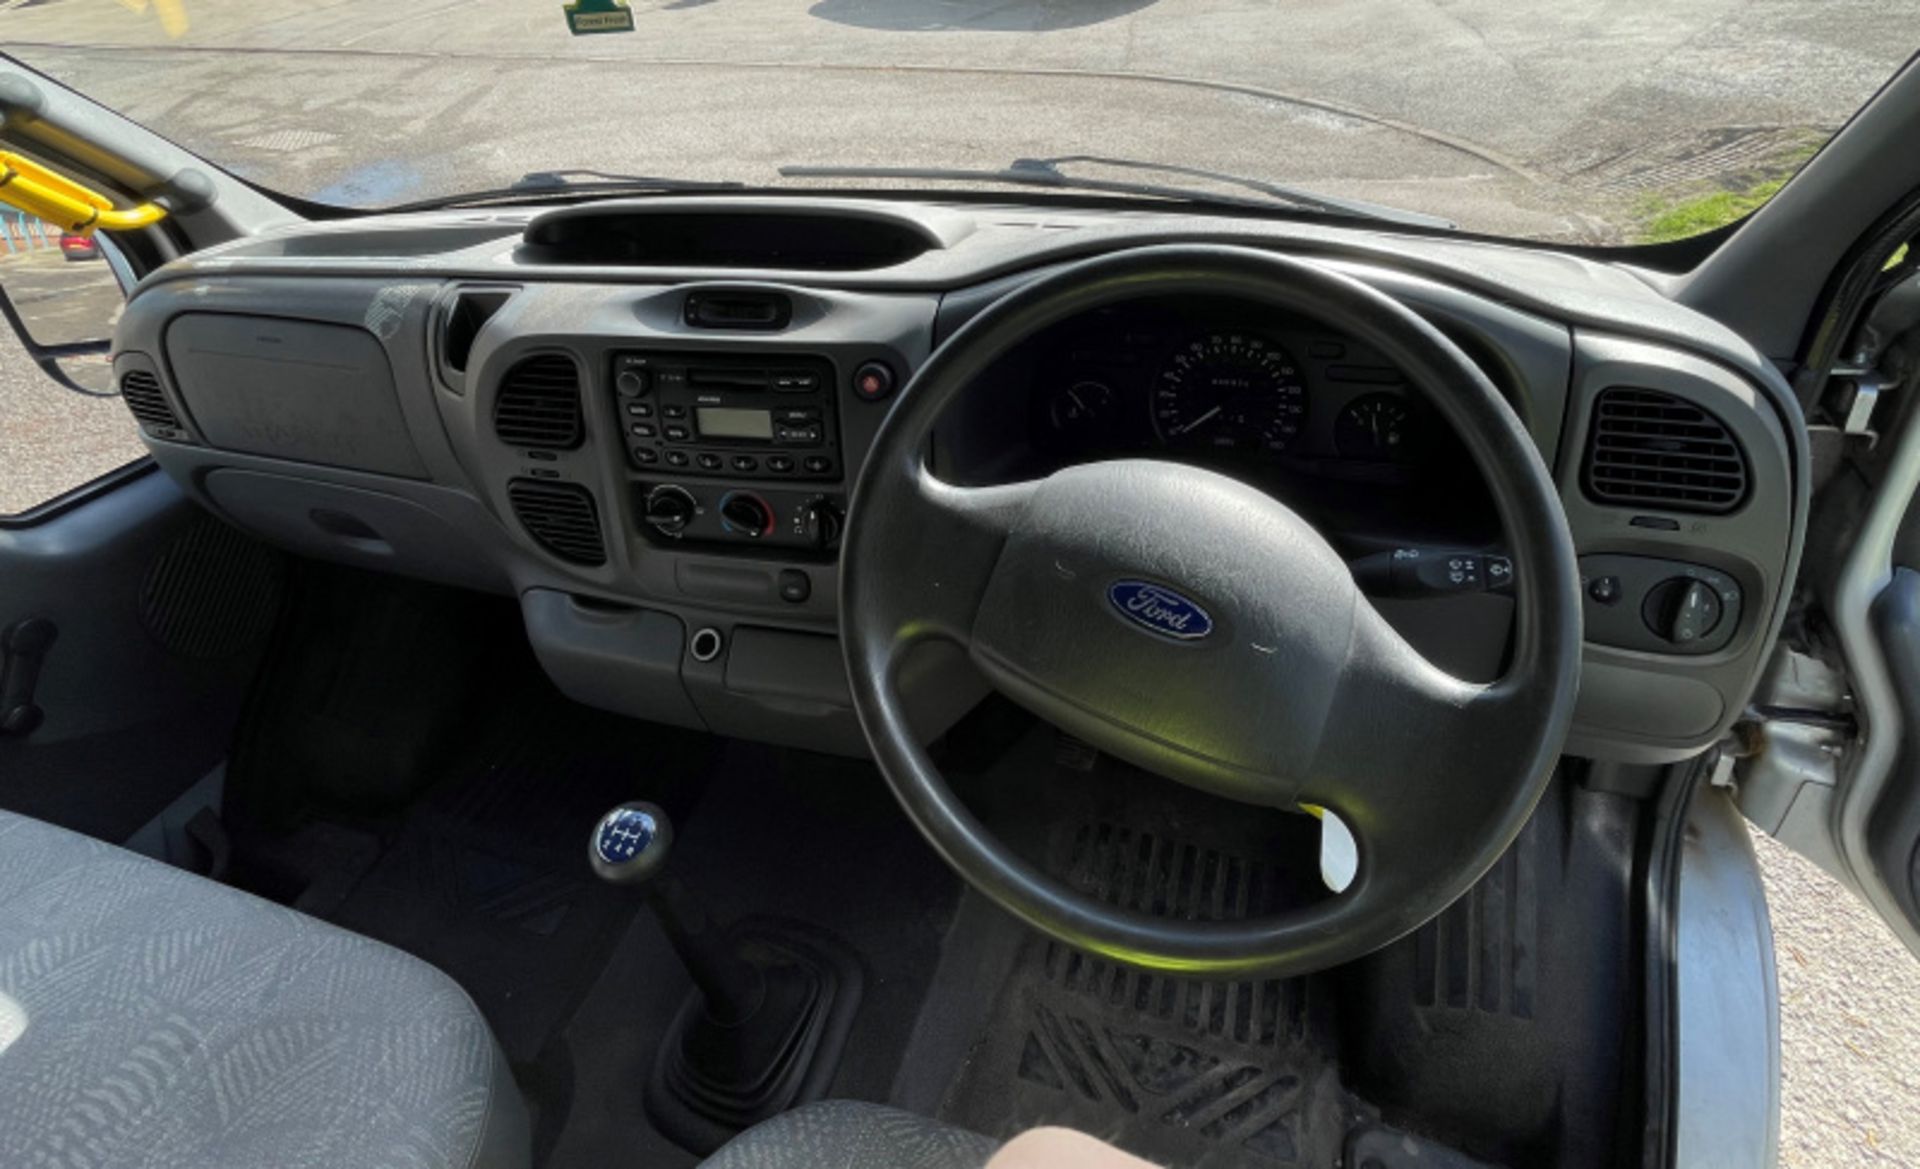 Ford Transit Van - Silver - 2003 - Diesel - 2.4L engine - 2 axle rigid body - 46973 miles - Image 9 of 26